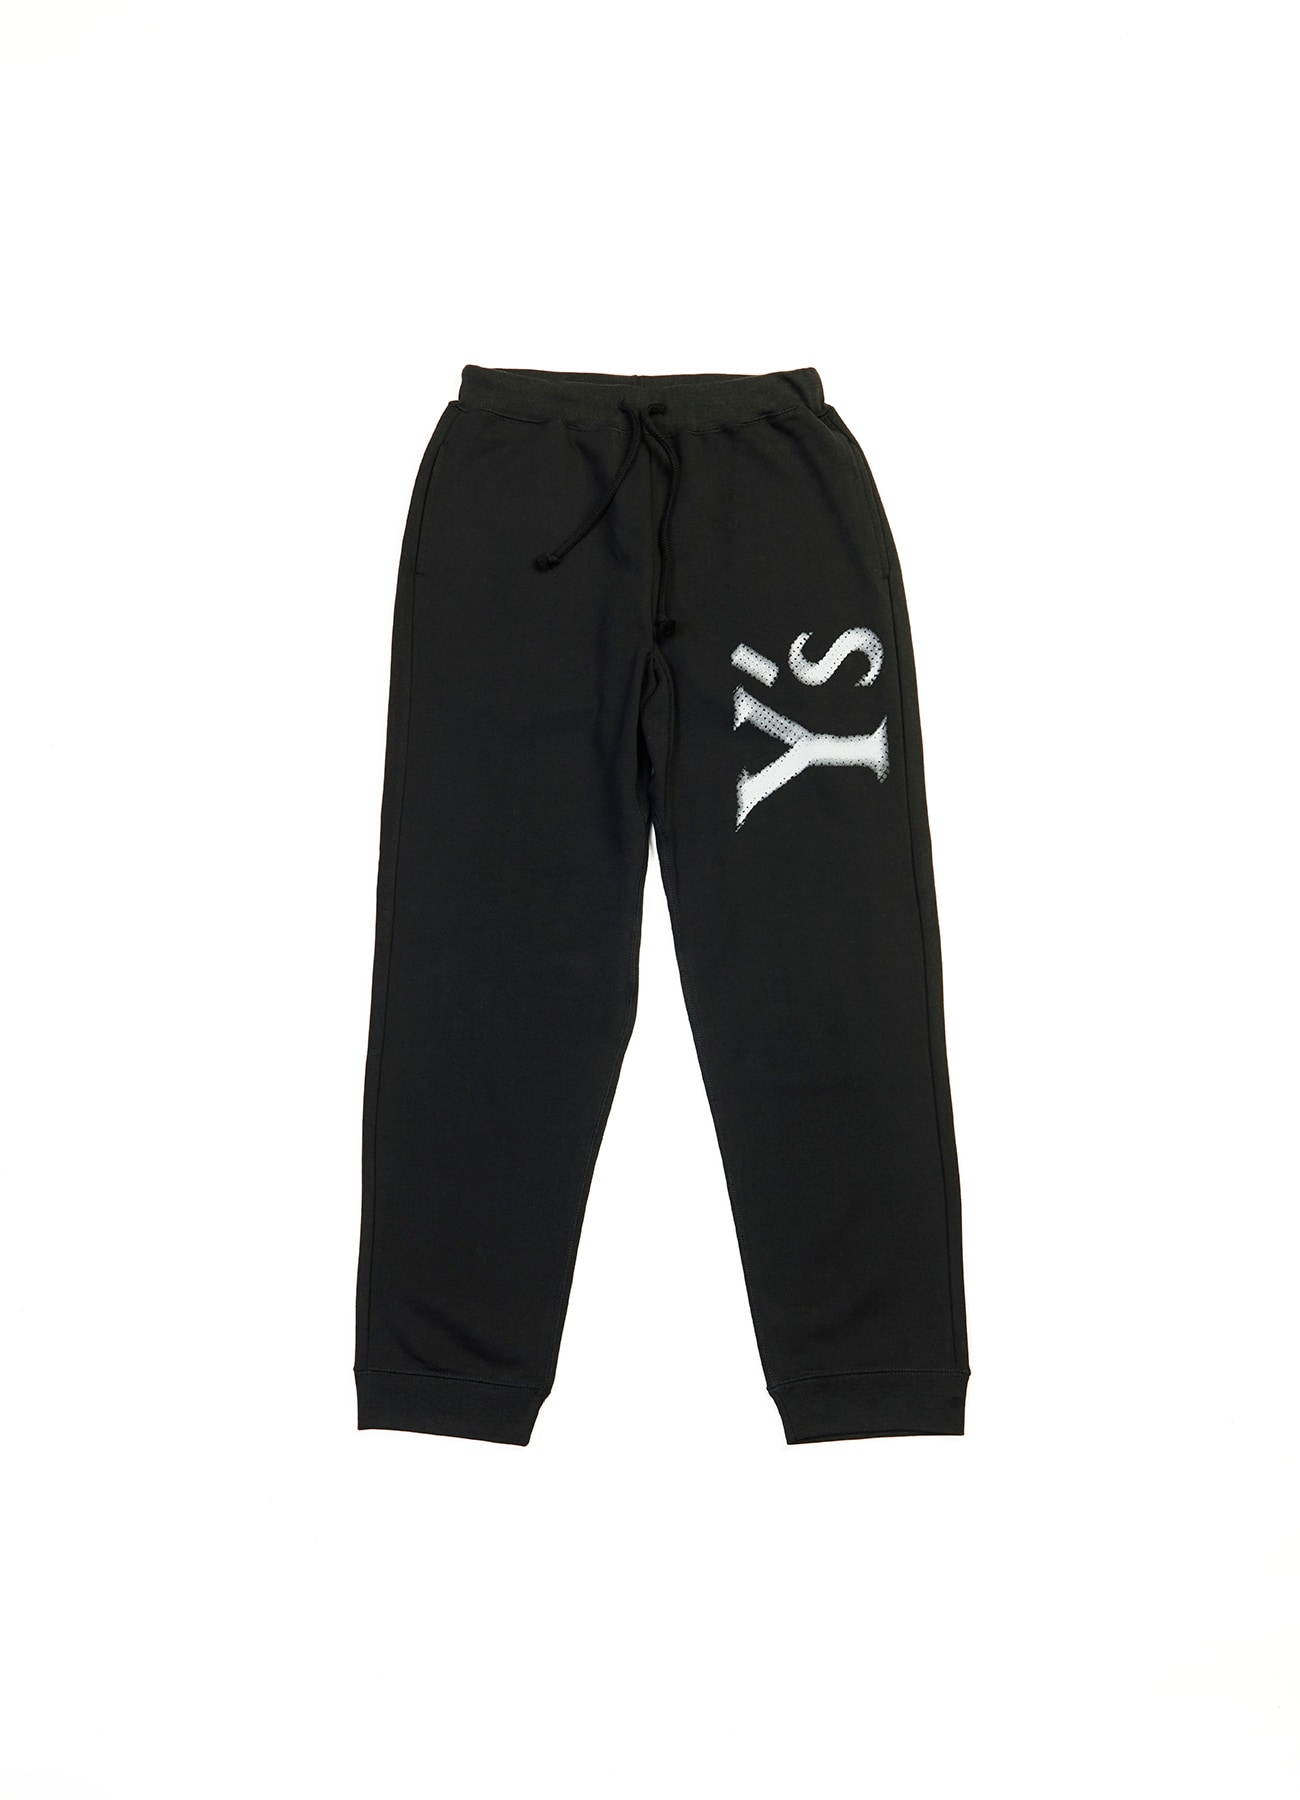 Online EXCLUSIVE-Y's logo Track pants (S Black): Y's ｜ THE SHOP 